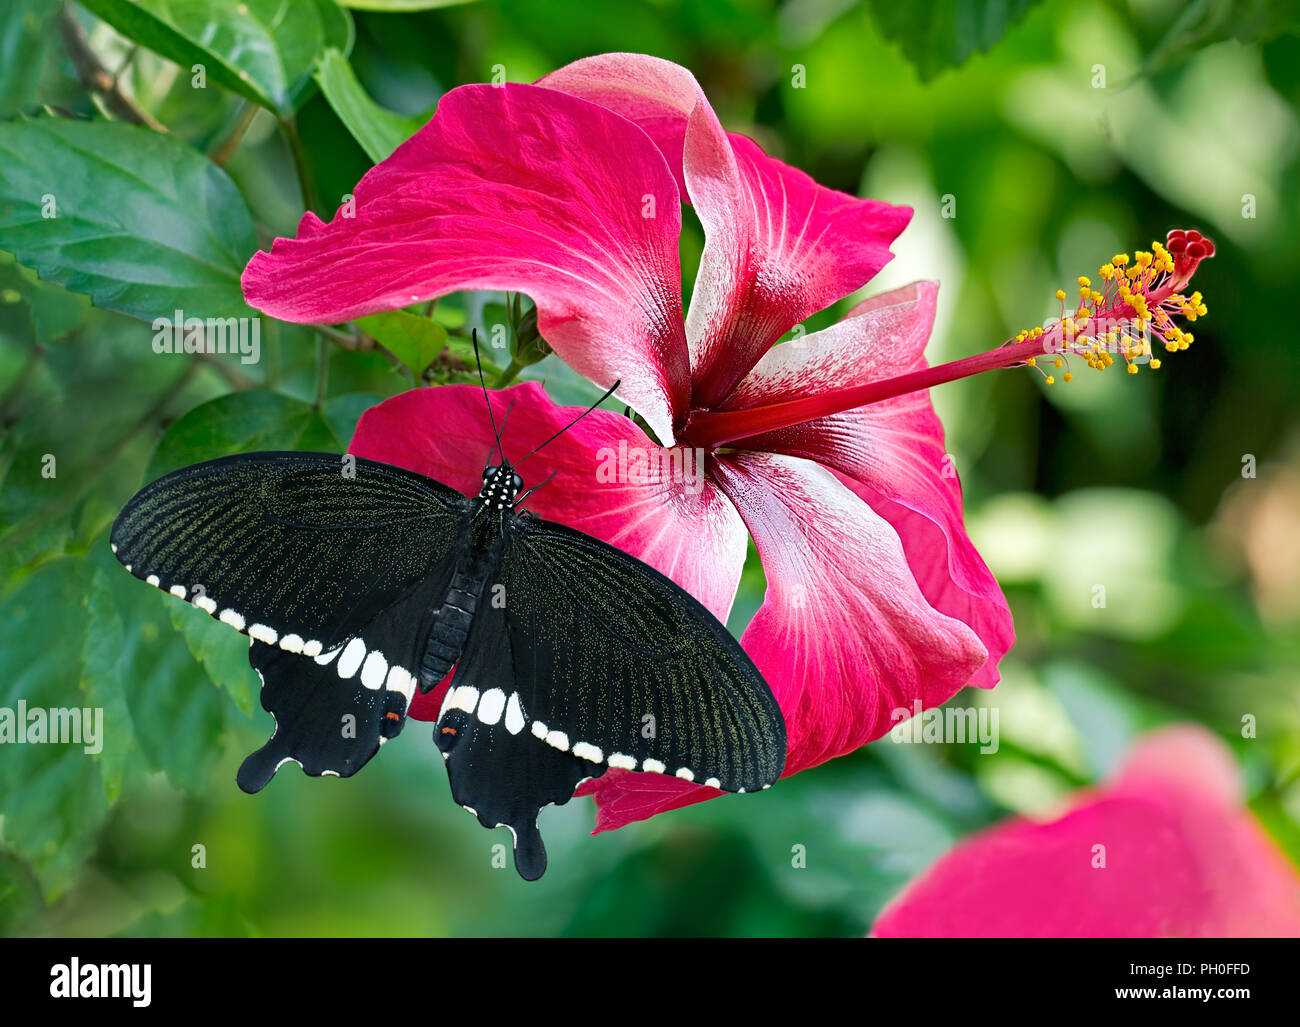 Mariposa Negra Papilio polytes romulus o indio, el Mormón común Papilionidae familia, sobre una flor rosa Hibiscus rosa-sinensis. Foto de stock